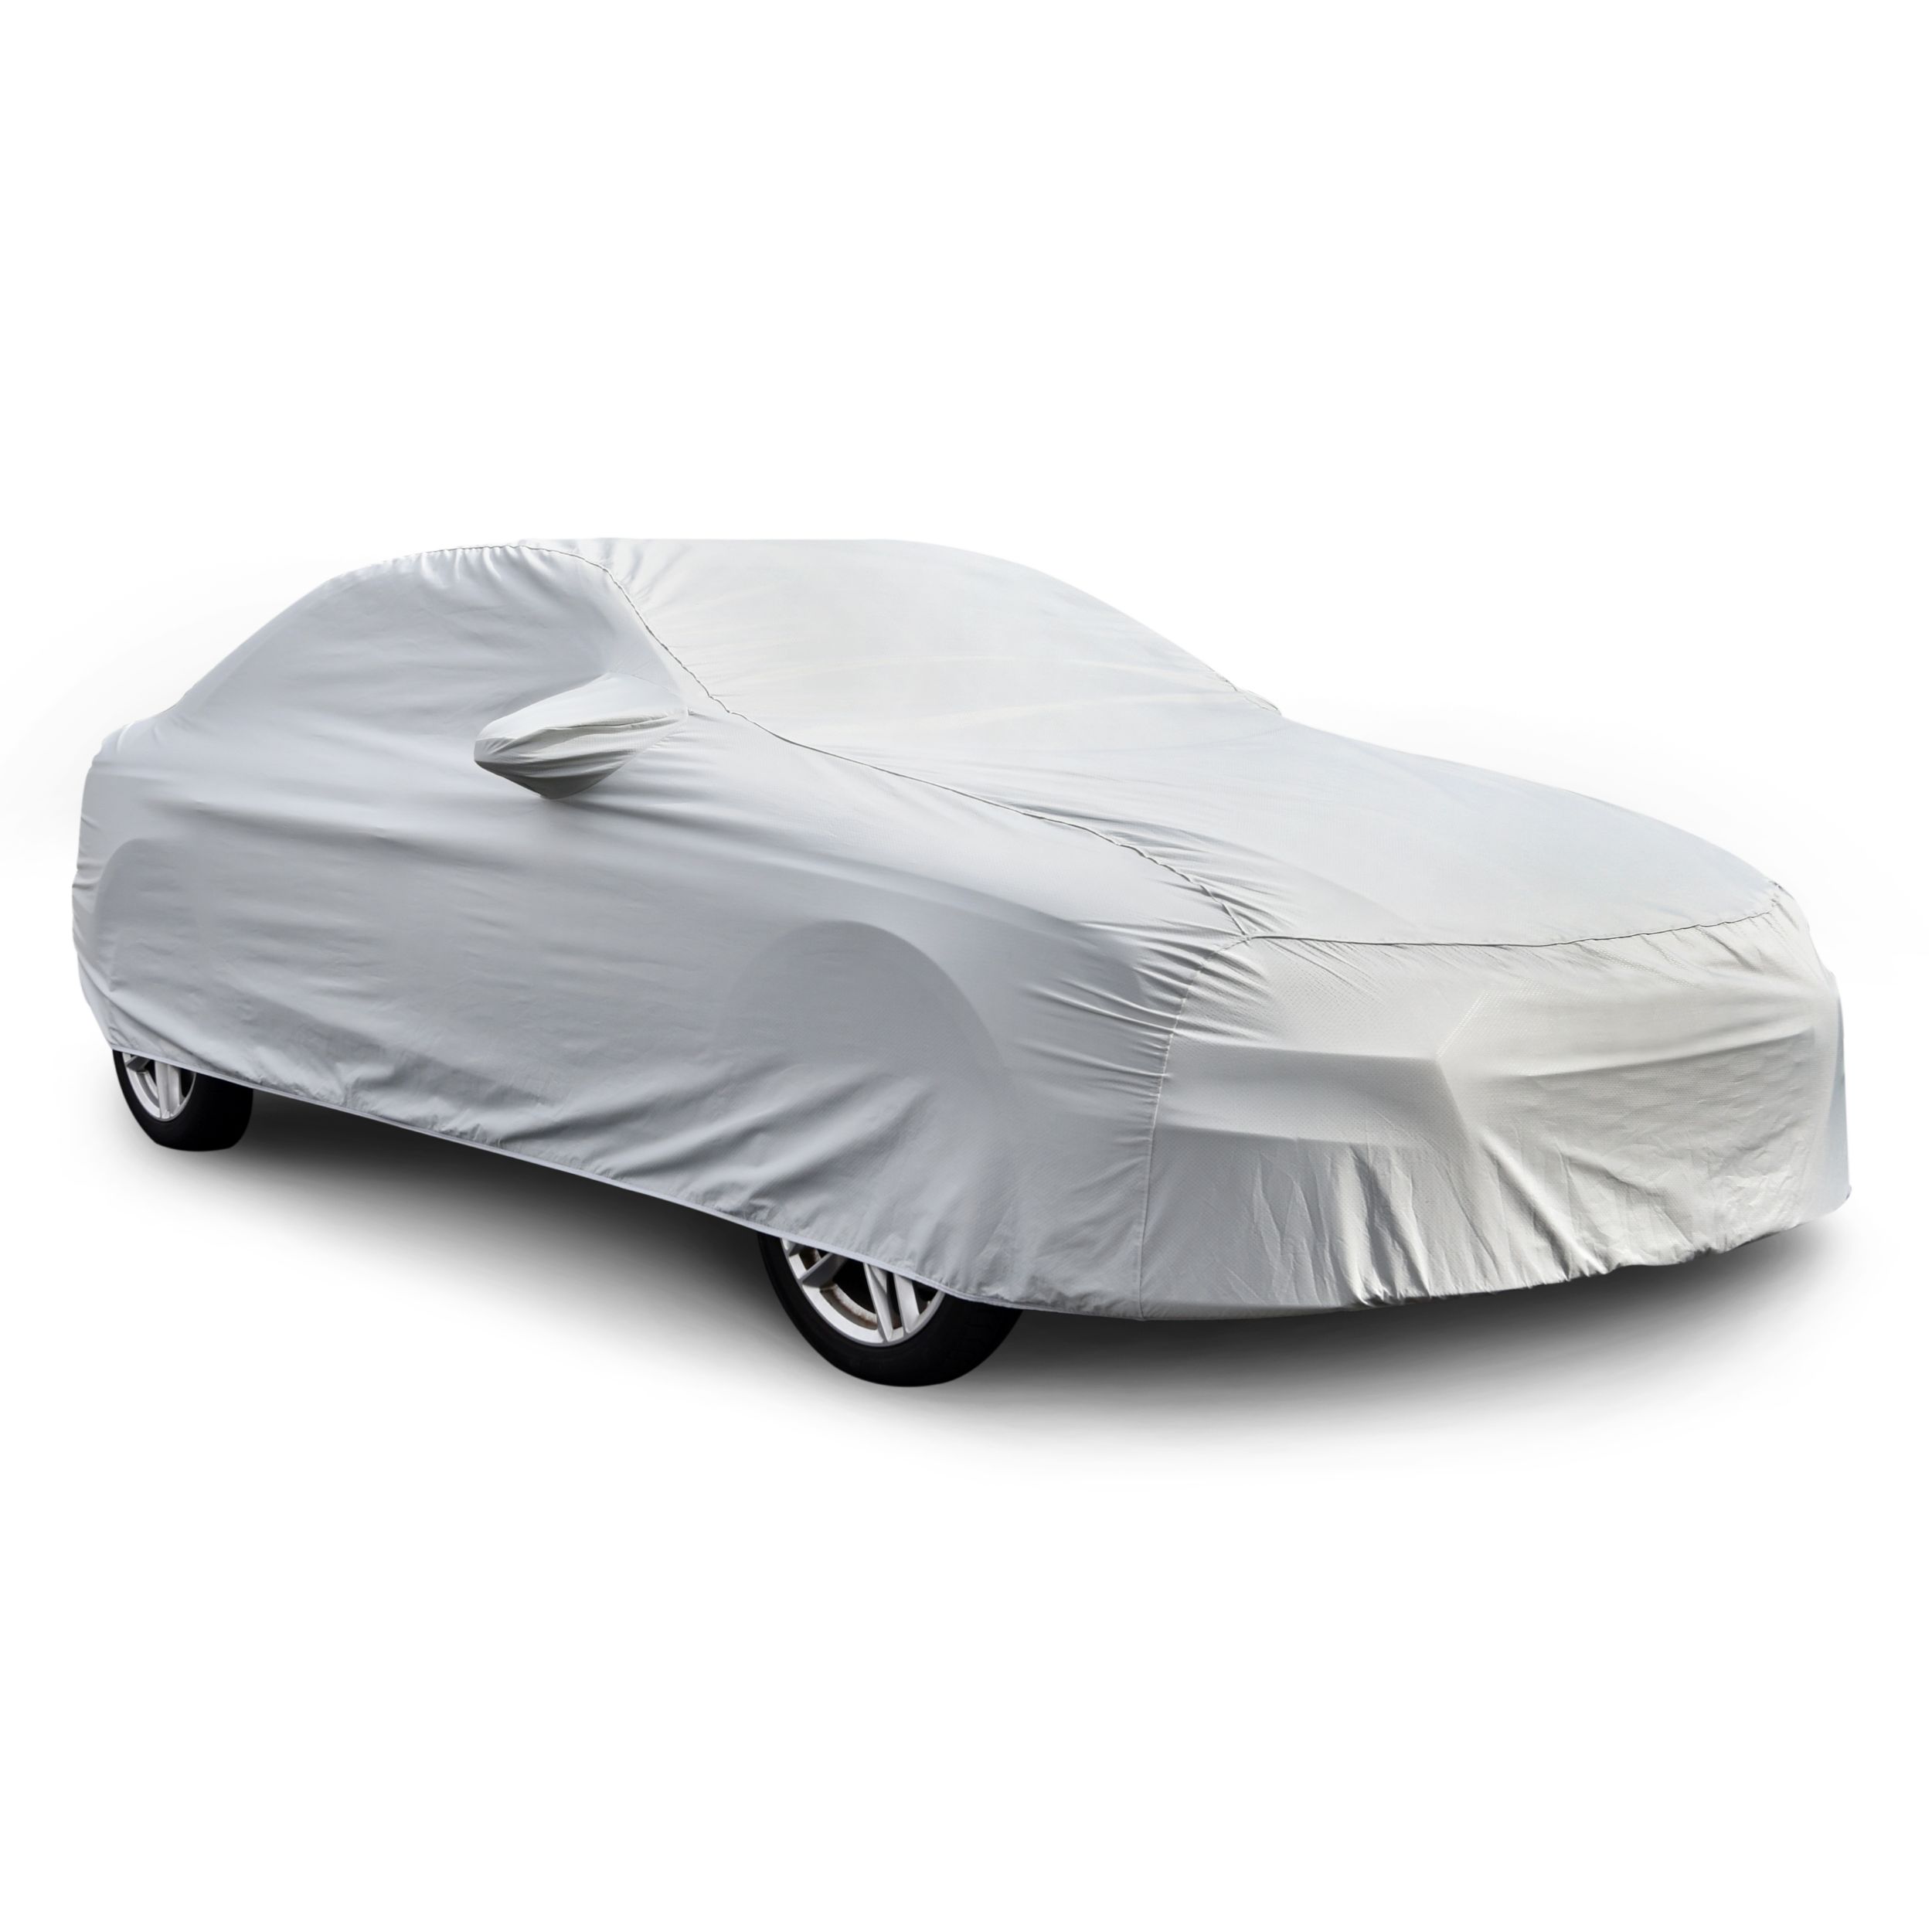 Premium Covers - Housses pour voiture – Custom Cars